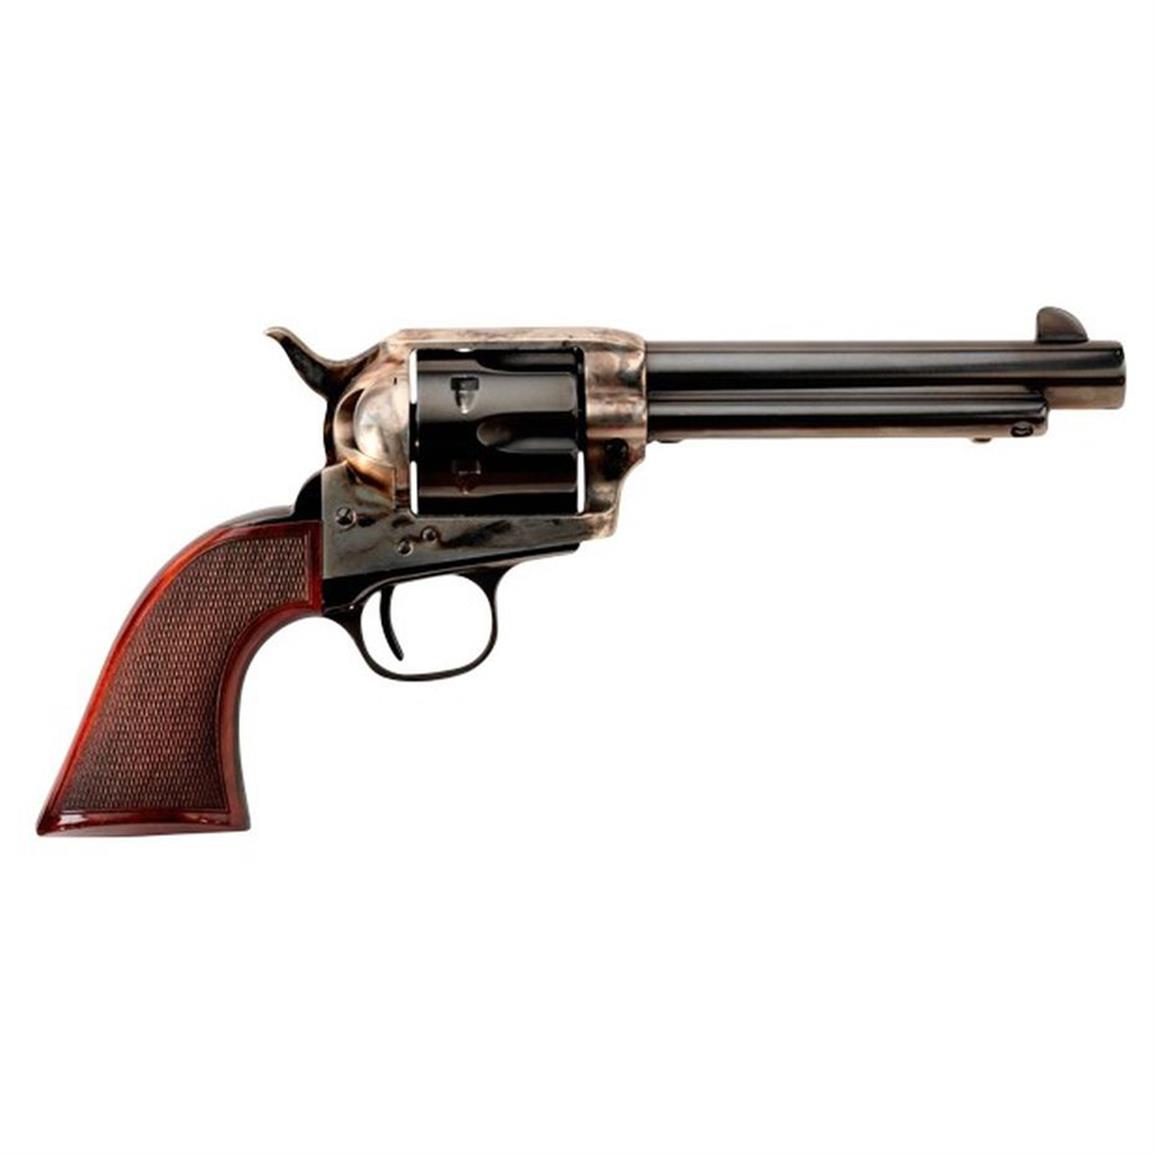 Taylor's &amp; Co. Uberti Smoke Wagon, Revolver, .357 Magnum, 4.75" Barrel, 6 Rounds